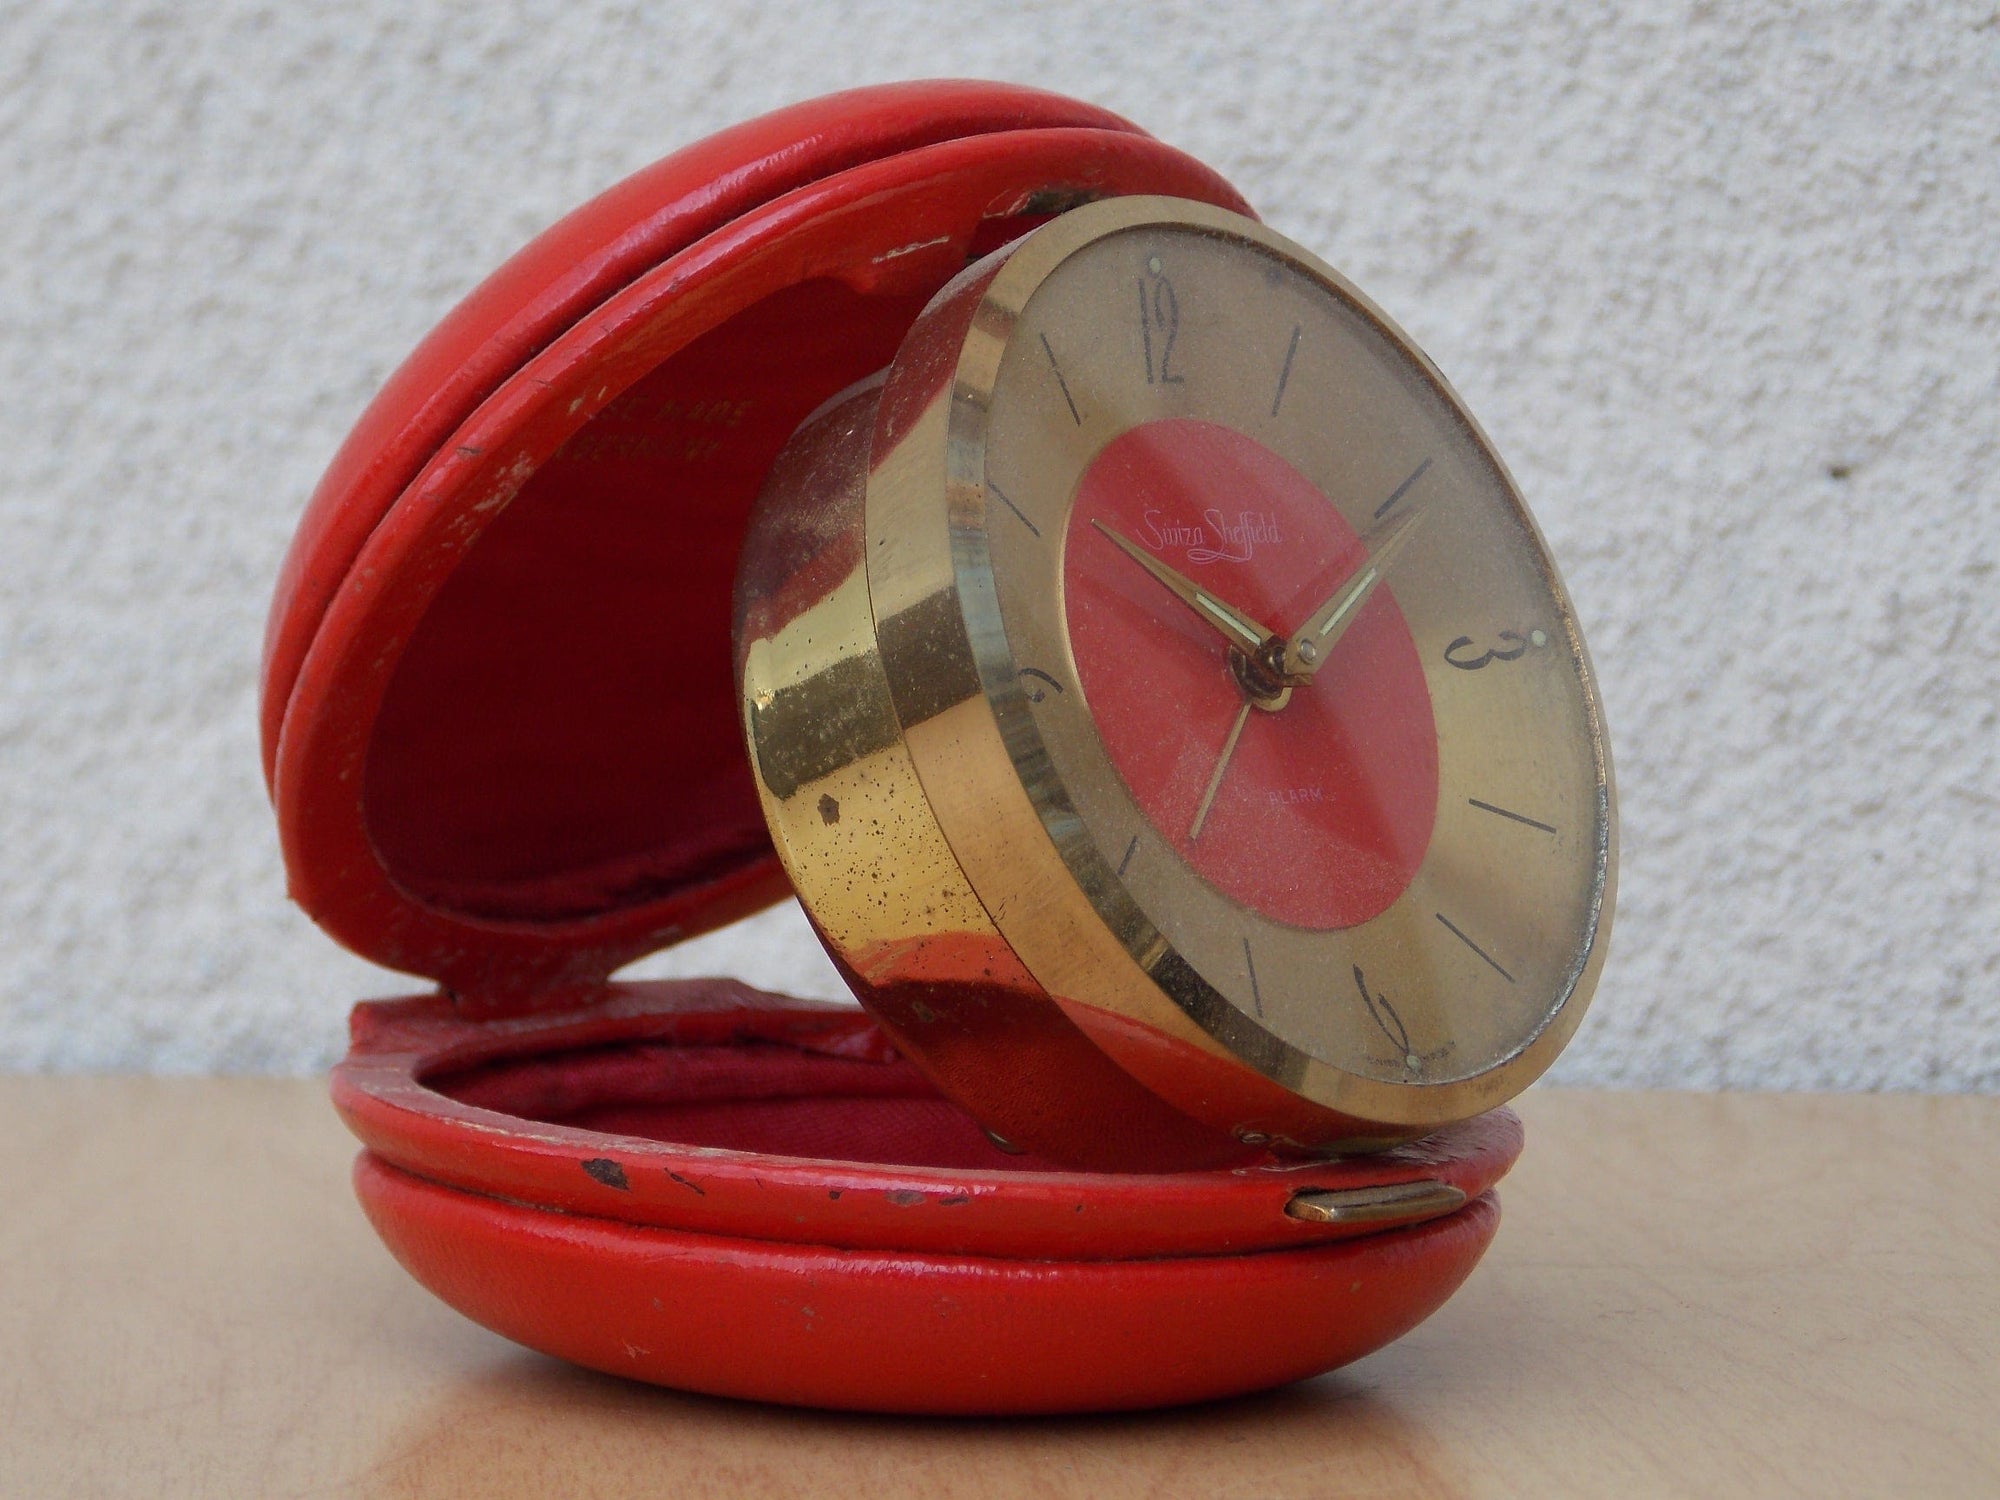 I Like Mike's Mid Century Modern Clock Swiza Sheifield Brass Red Leather Round Travel Clock, Wind Up